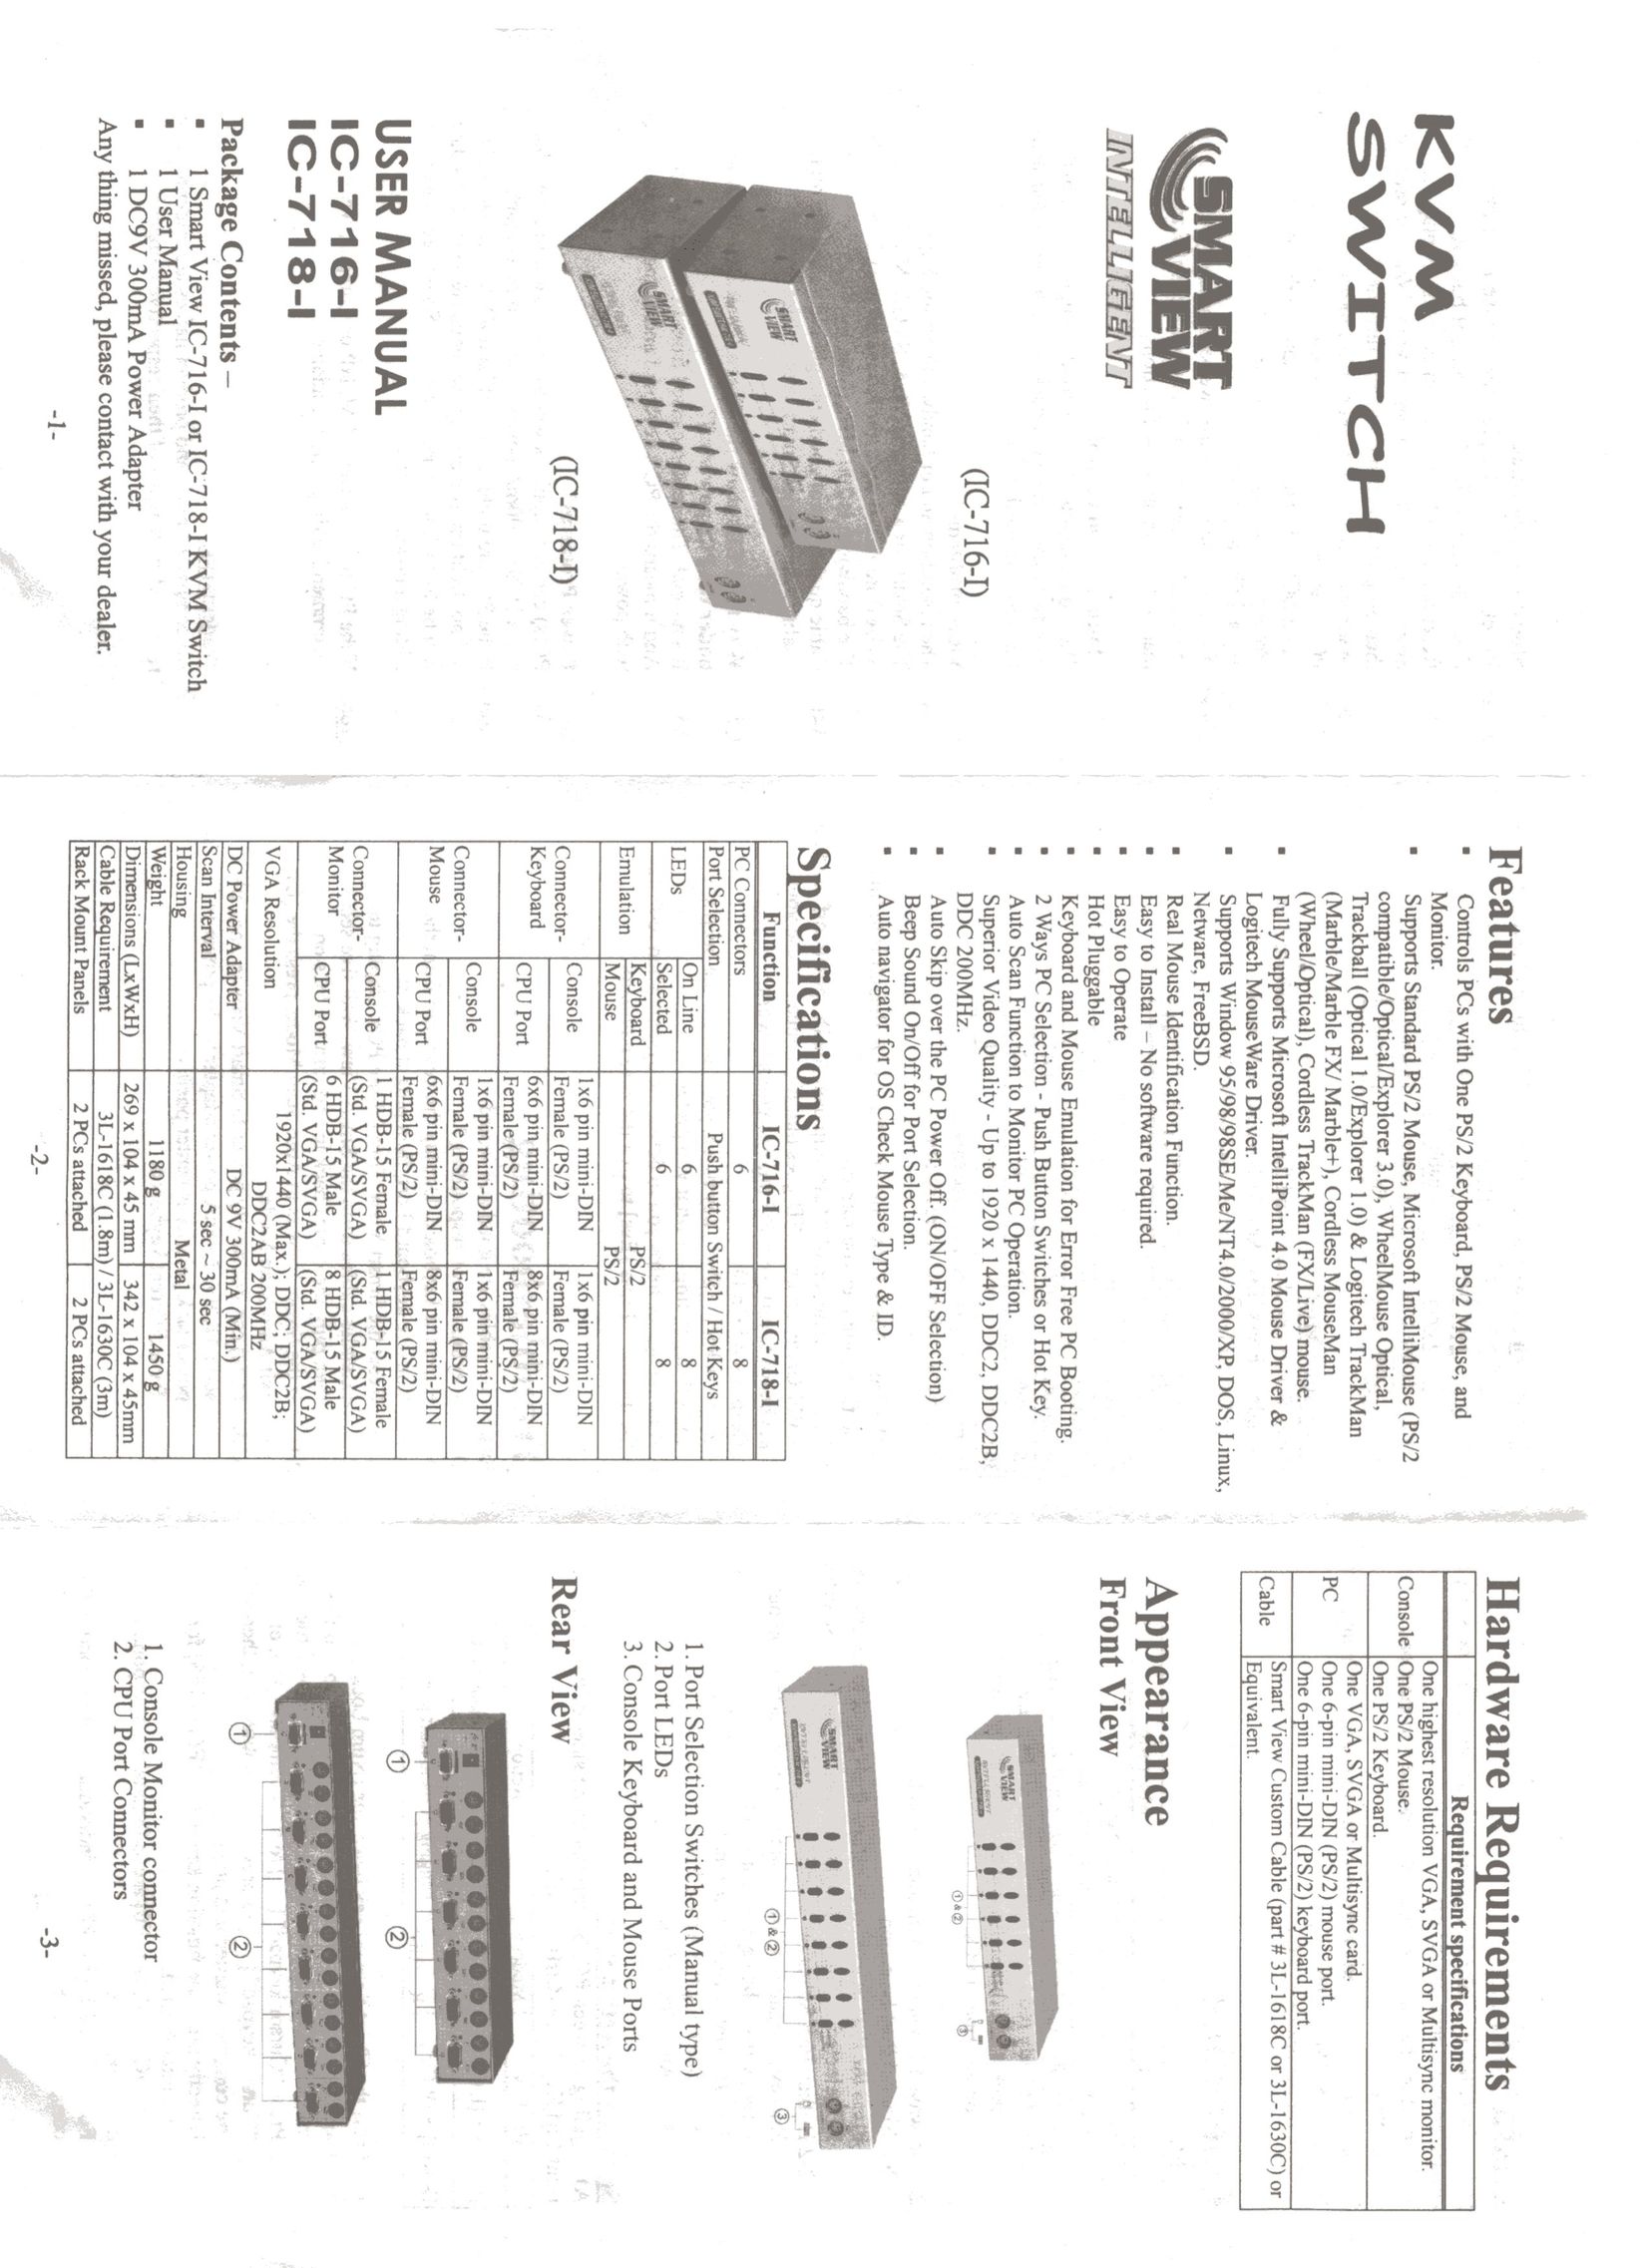 QVS IC-718-1 Switch User Manual